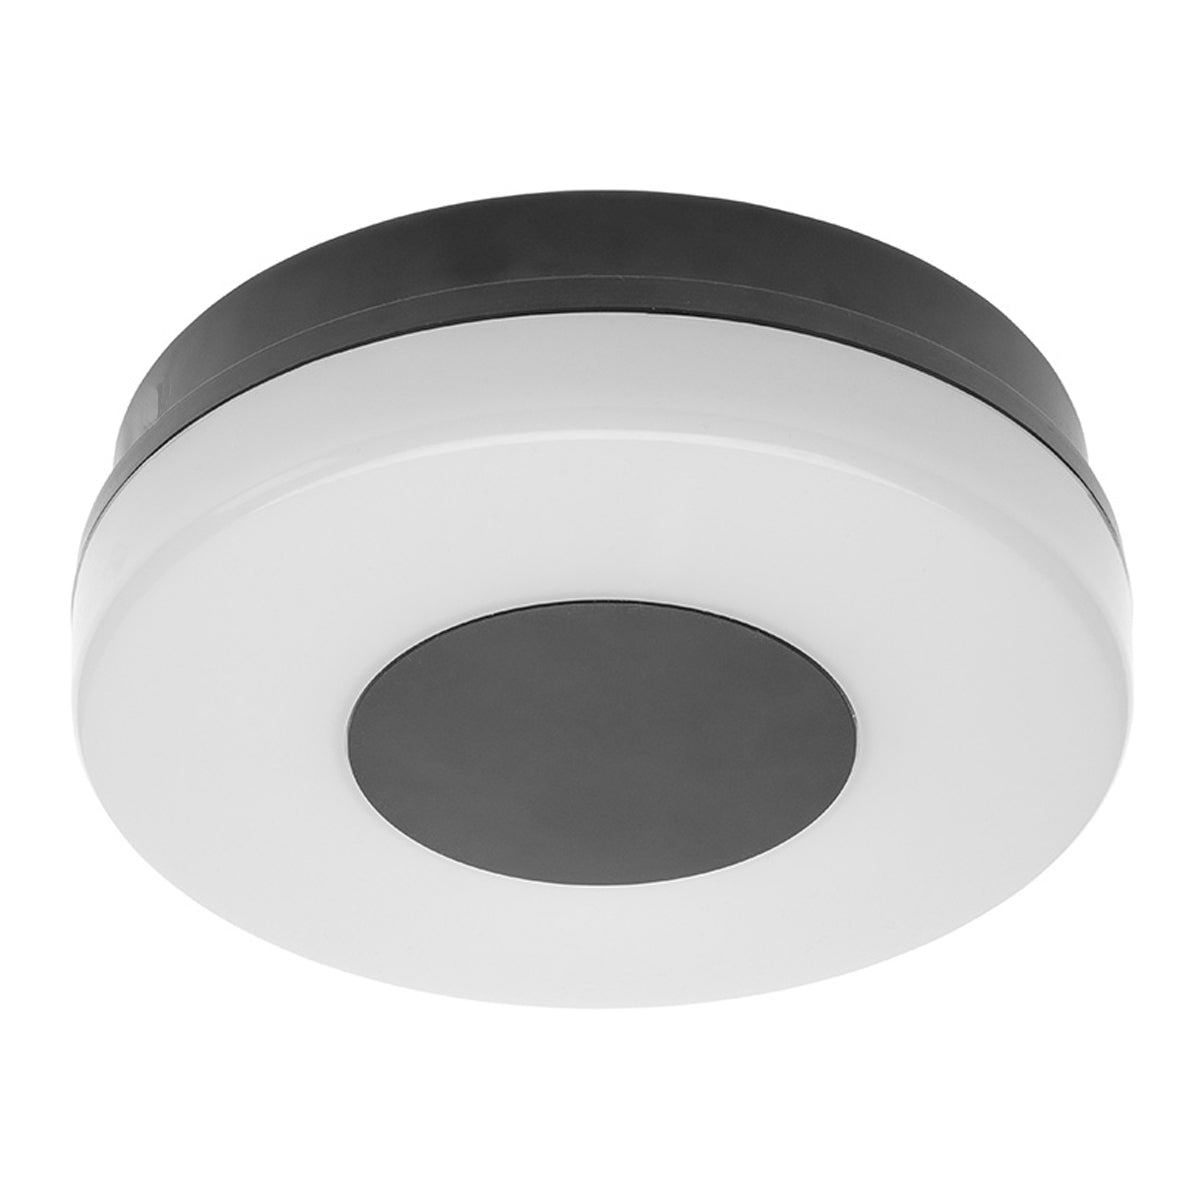 CGC TWISTER Black / White Round LED Light